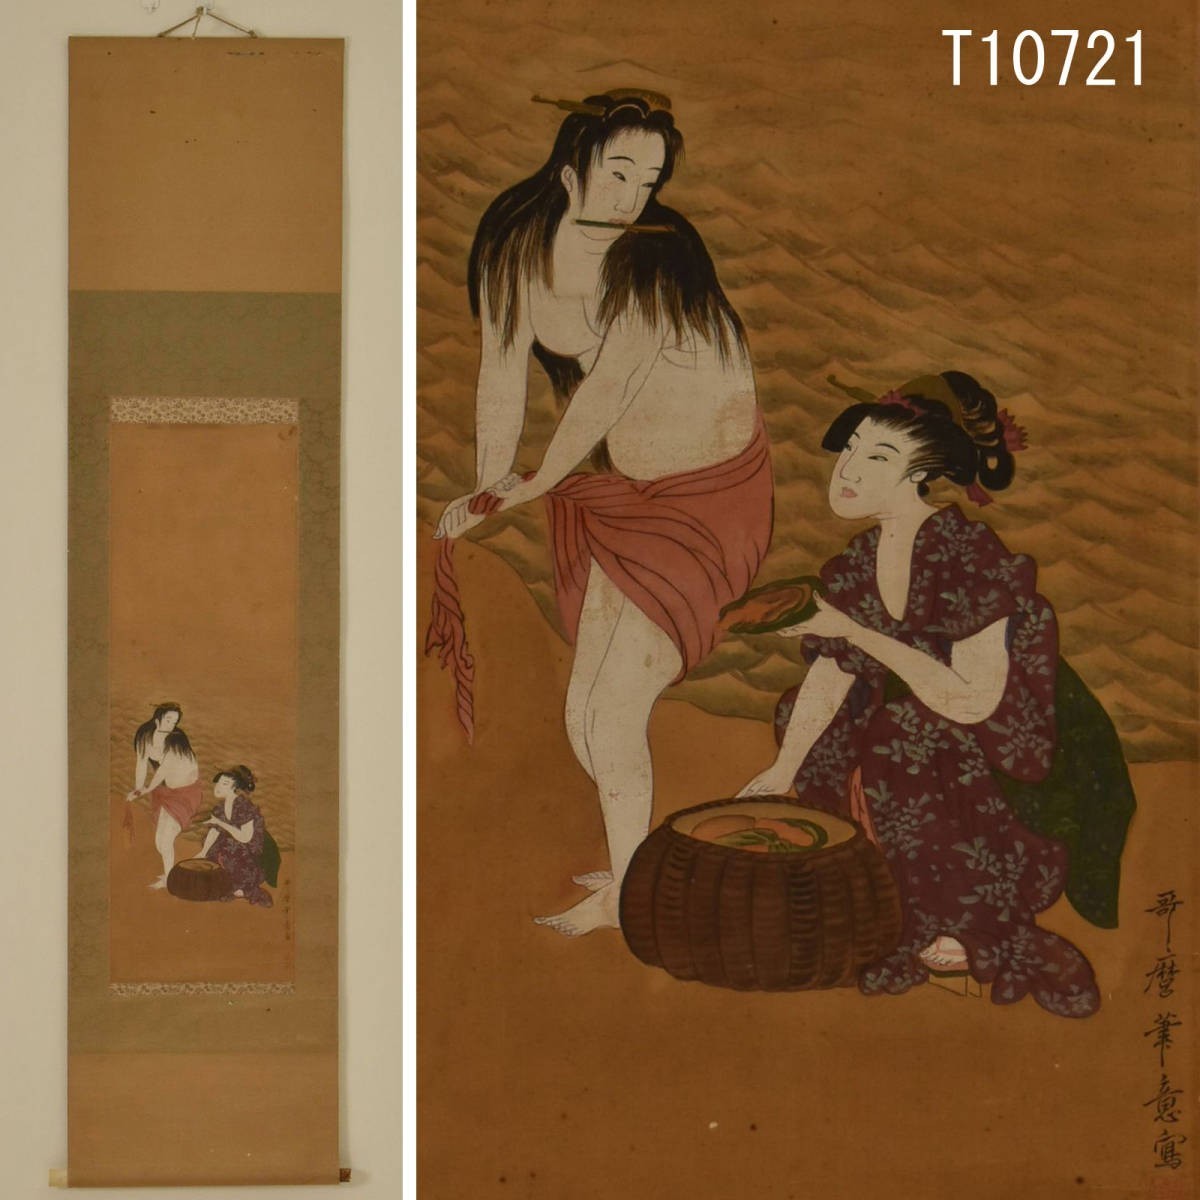 T10721 उतामारो की हस्तलिखित सौंदर्य पेंटिंग हैंगिंग स्क्रॉल: प्रामाणिक, चित्रकारी, जापानी चित्रकला, व्यक्ति, बोधिसत्त्व